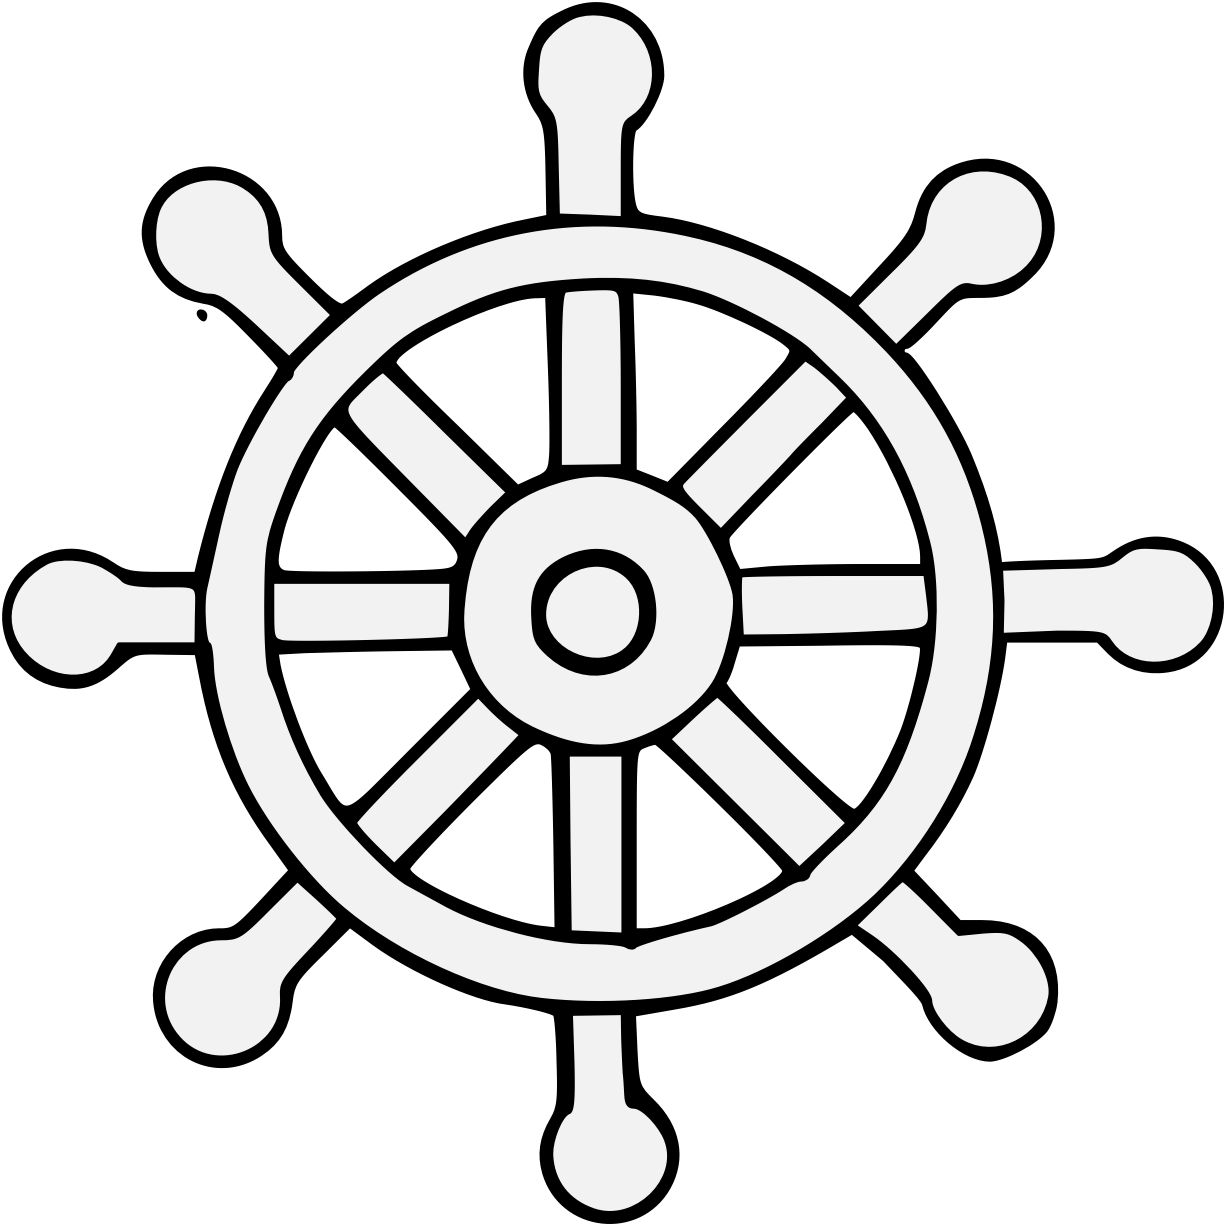 Ship Wheel Png - Ship Wheel Tattoo Design - Free Transparent PNG Download -  PNGkey